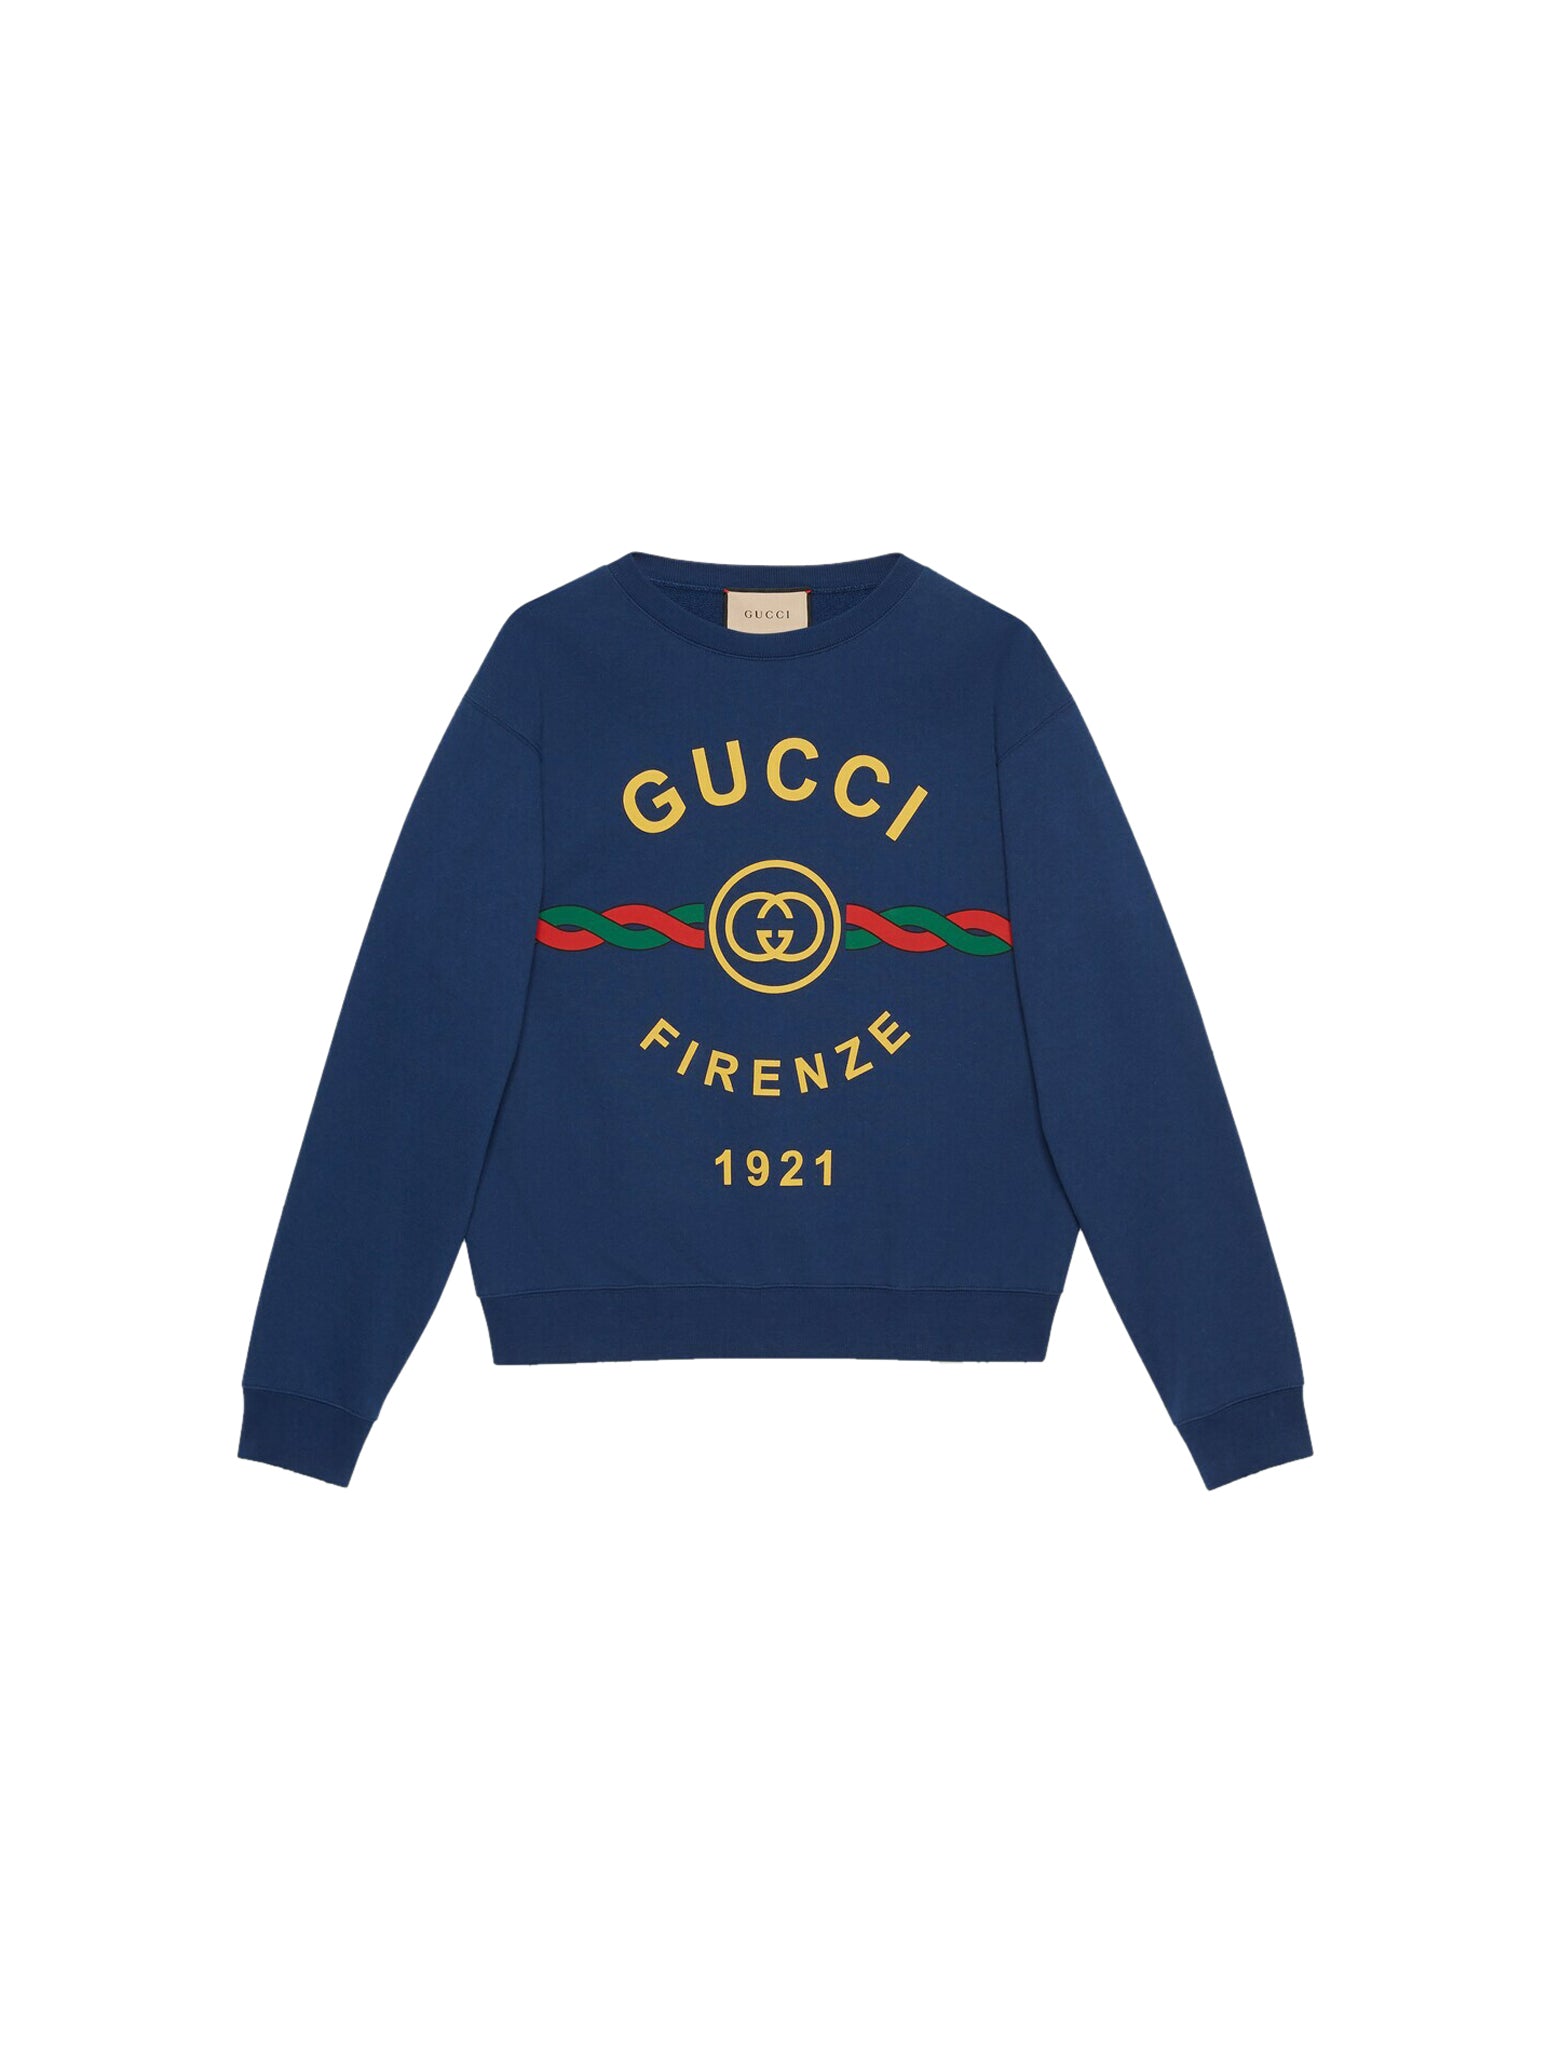 `Gucci Firenze 1921` cotton sweatshirt